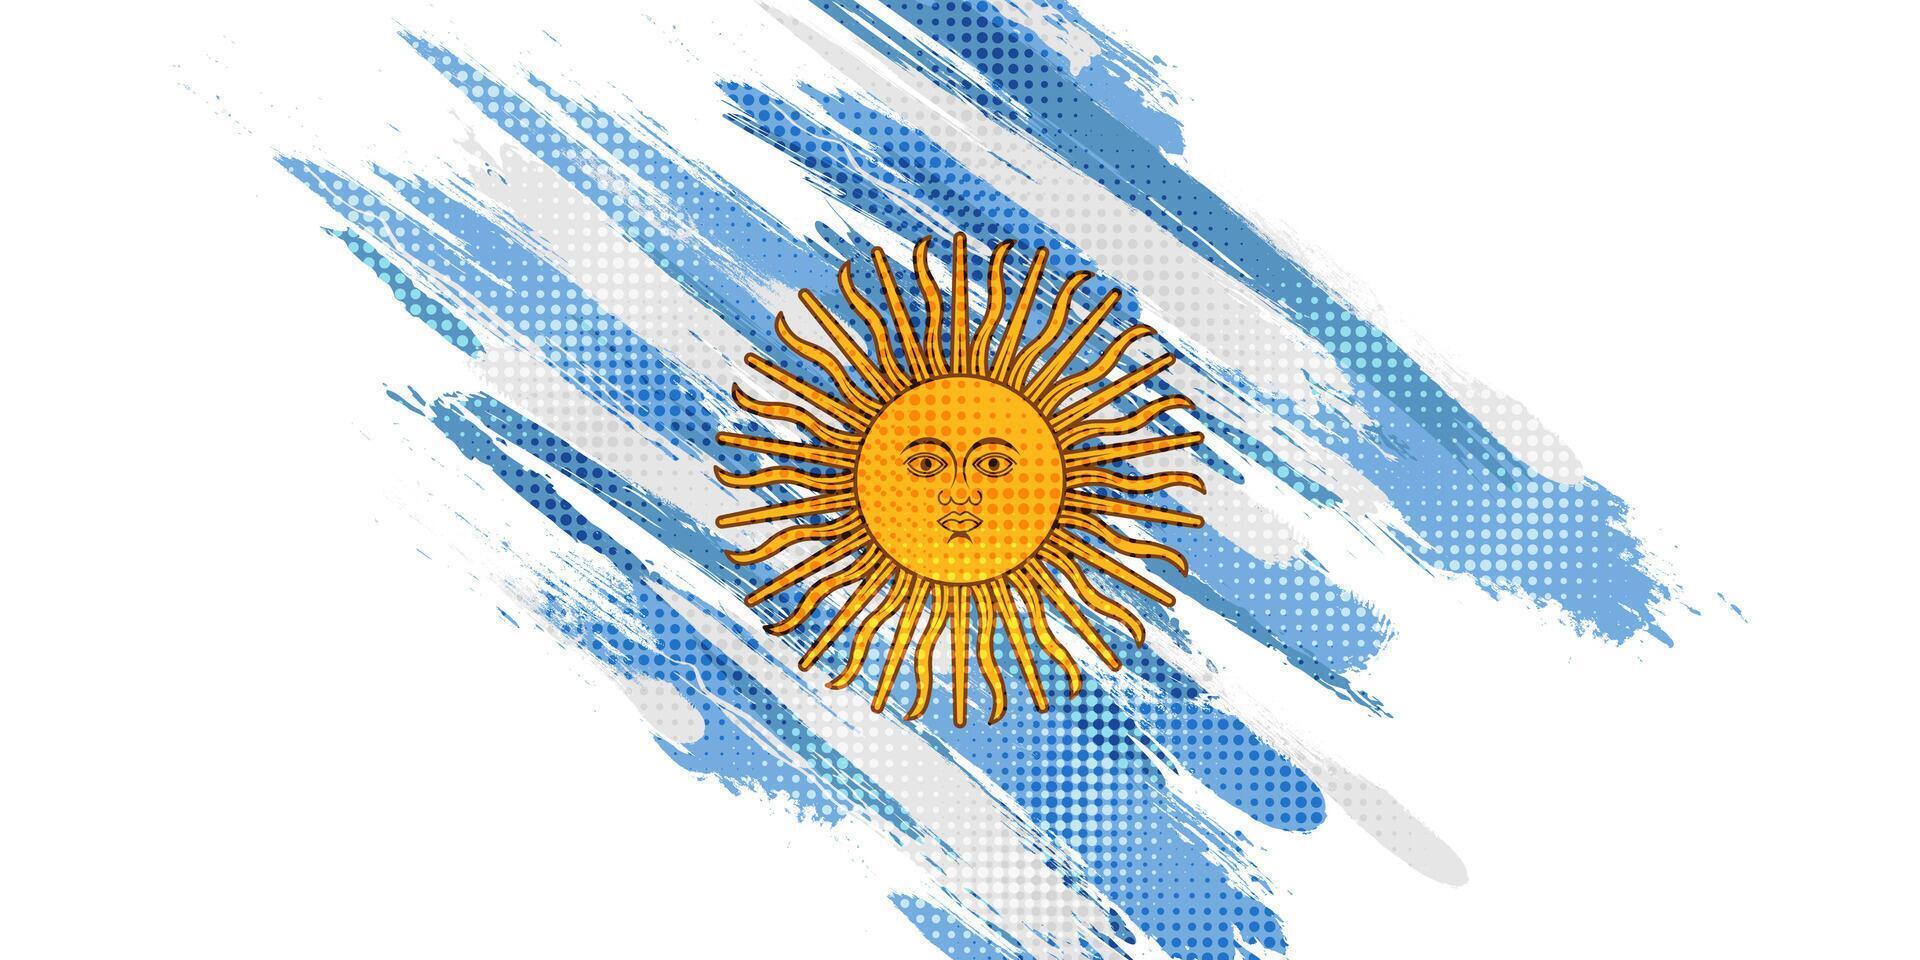 Argentina bandeira dentro grunge escova pintura estilo com meio-tom efeito. argentina bandeira dentro grunge conceito vetor